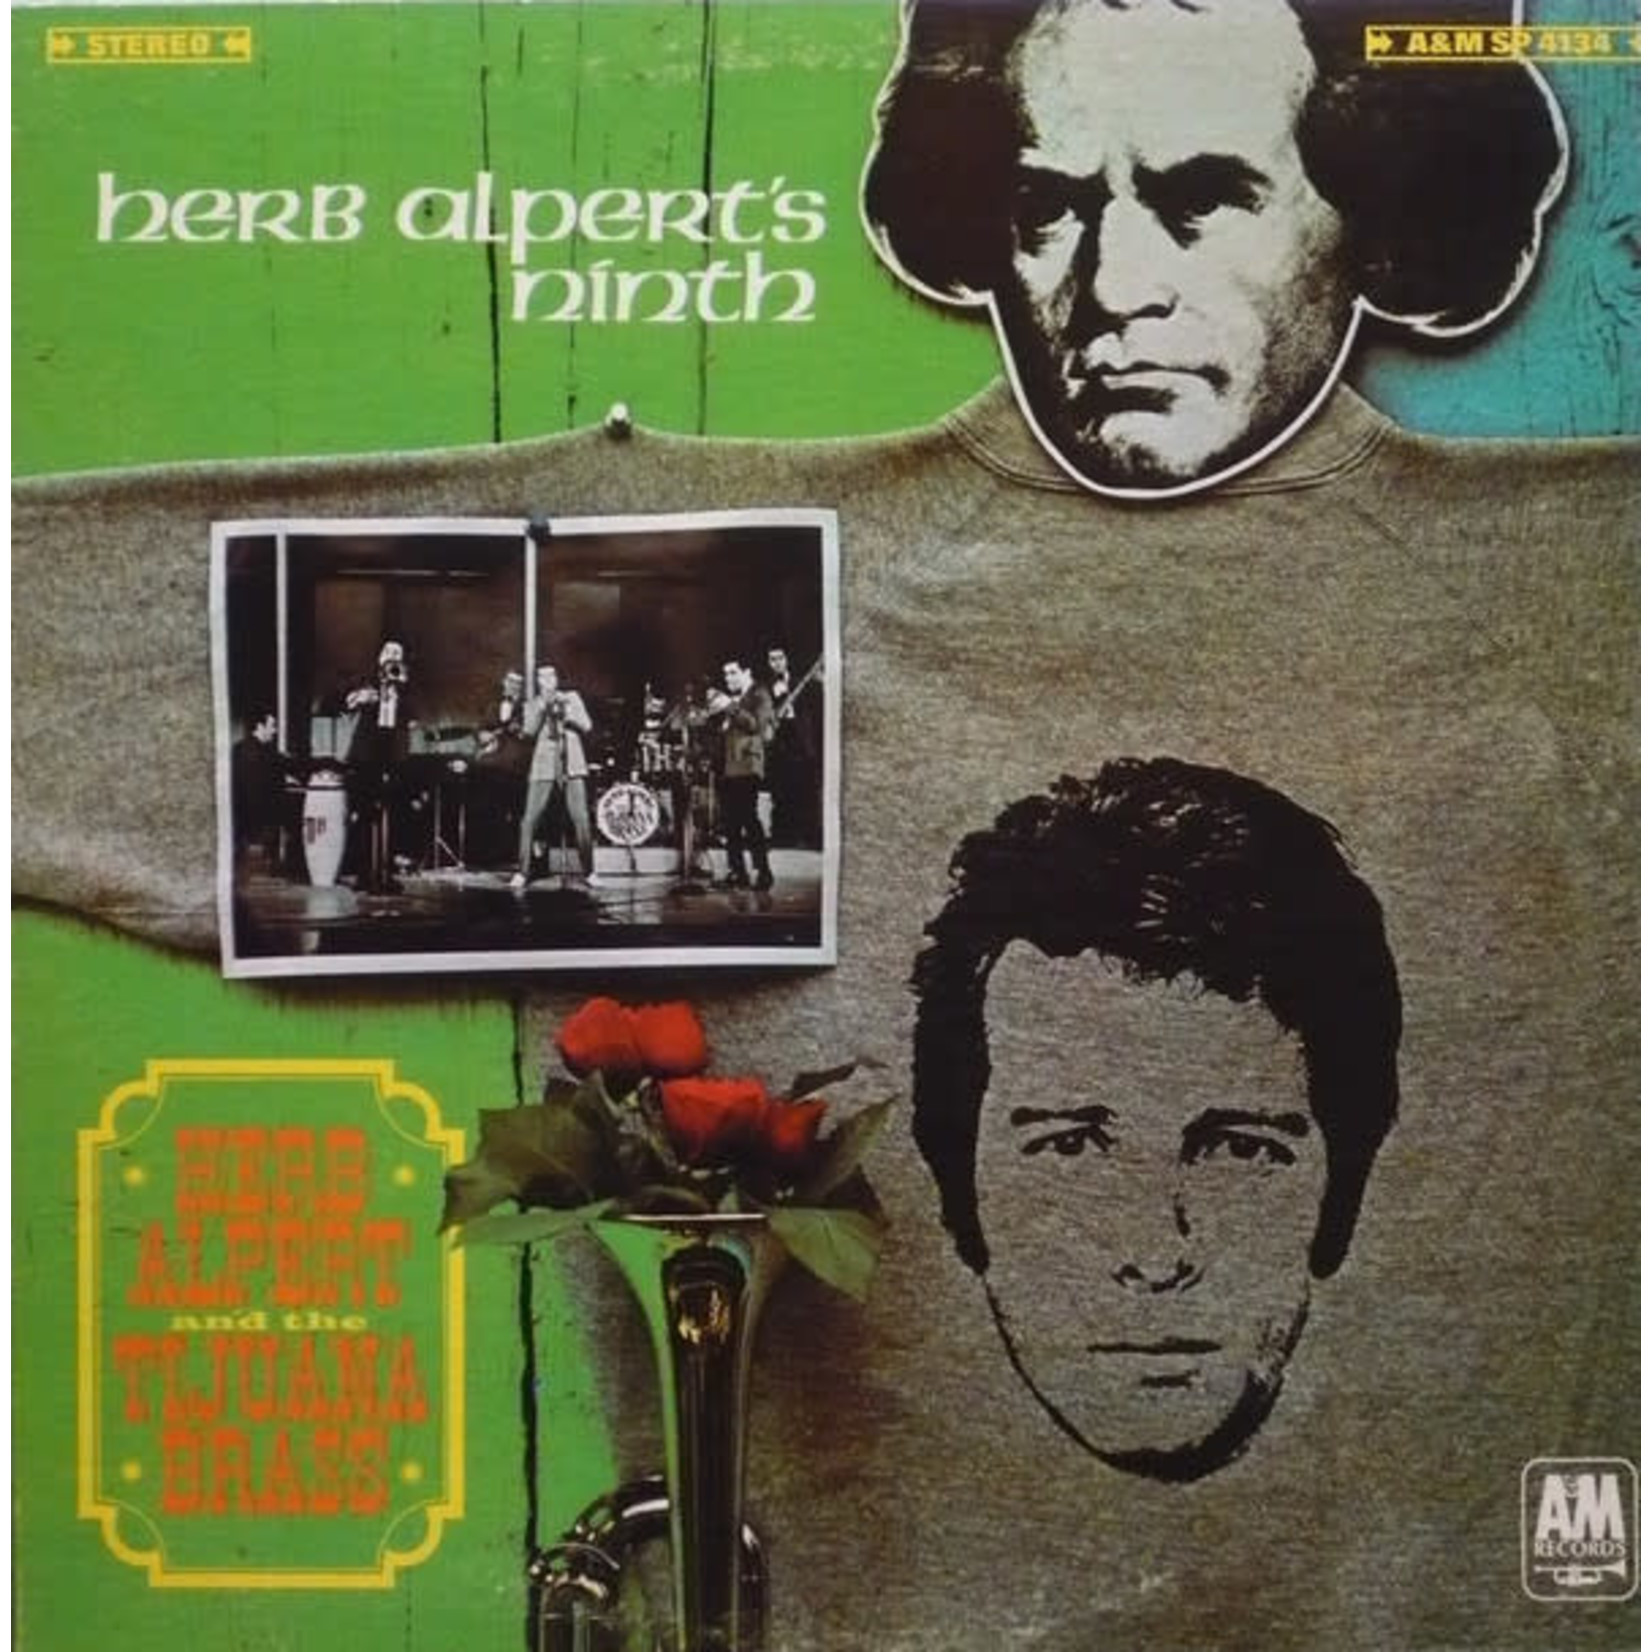 Herb Alpert Herb Alpert & The Tijuana Brass – Herb Alpert's Ninth (G)